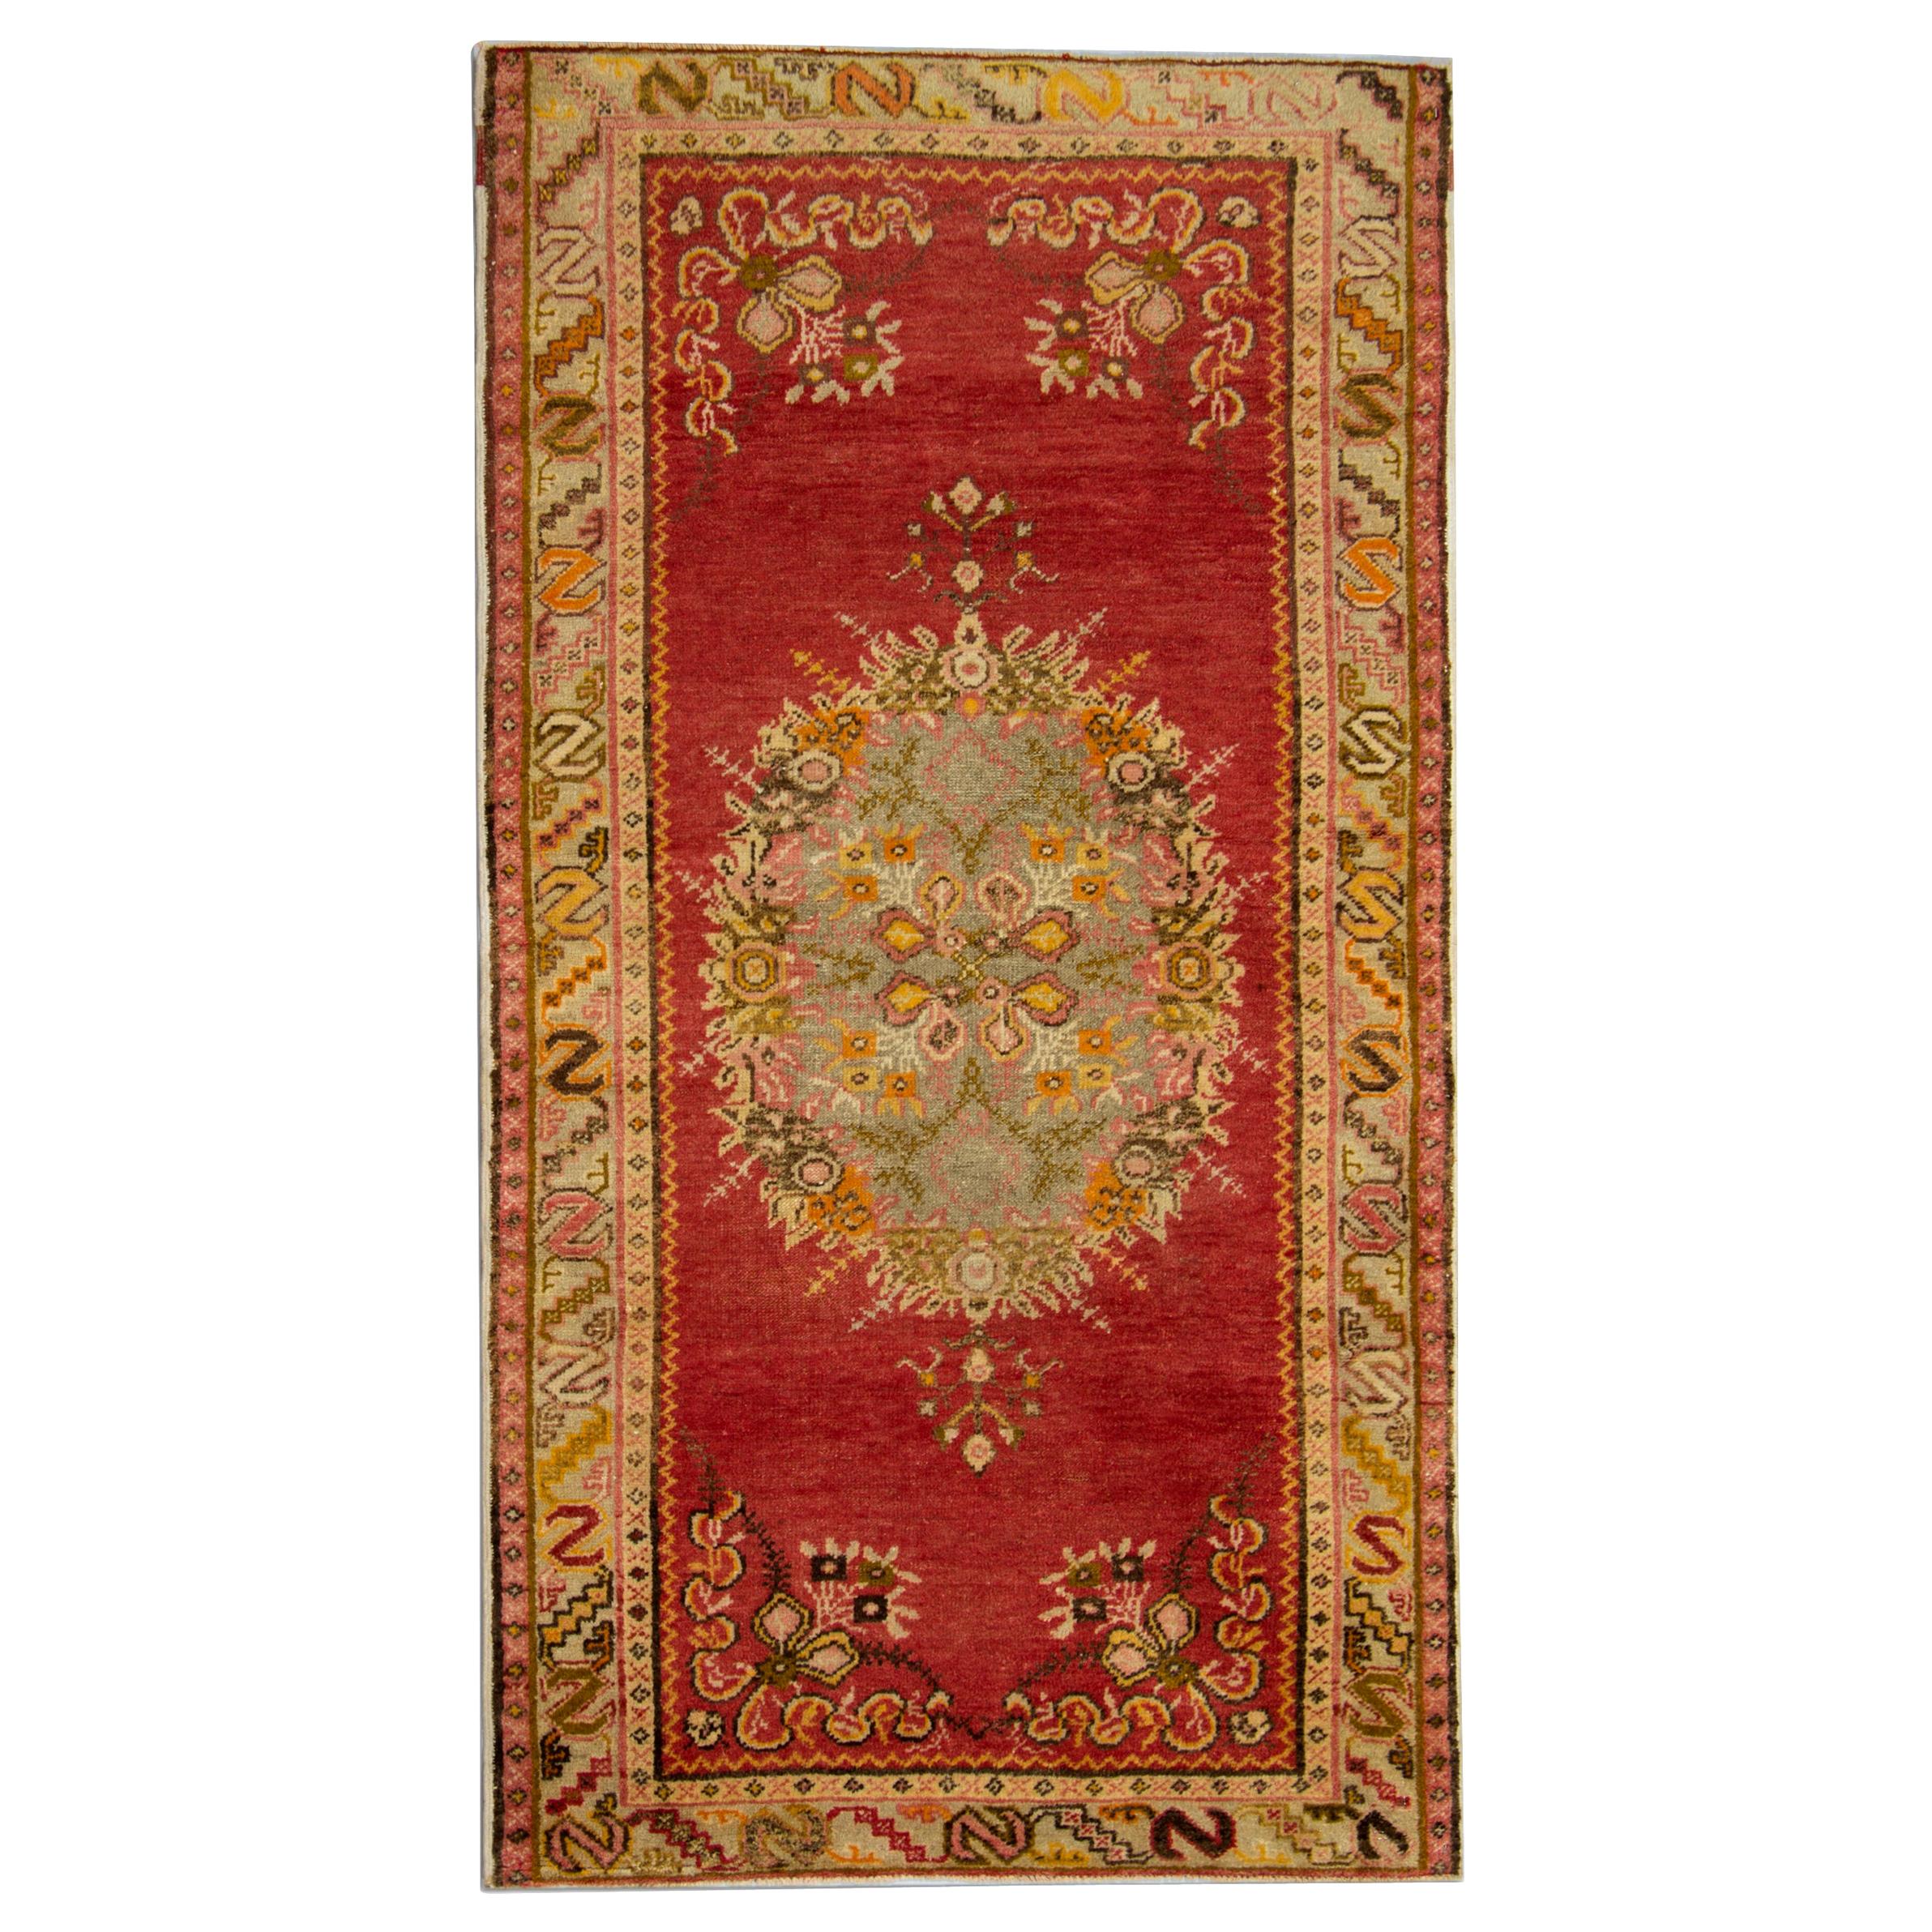 Handmade Carpet Antique Rugs, Turkish Rug, Luxury Red Oriental Rugs For Sale